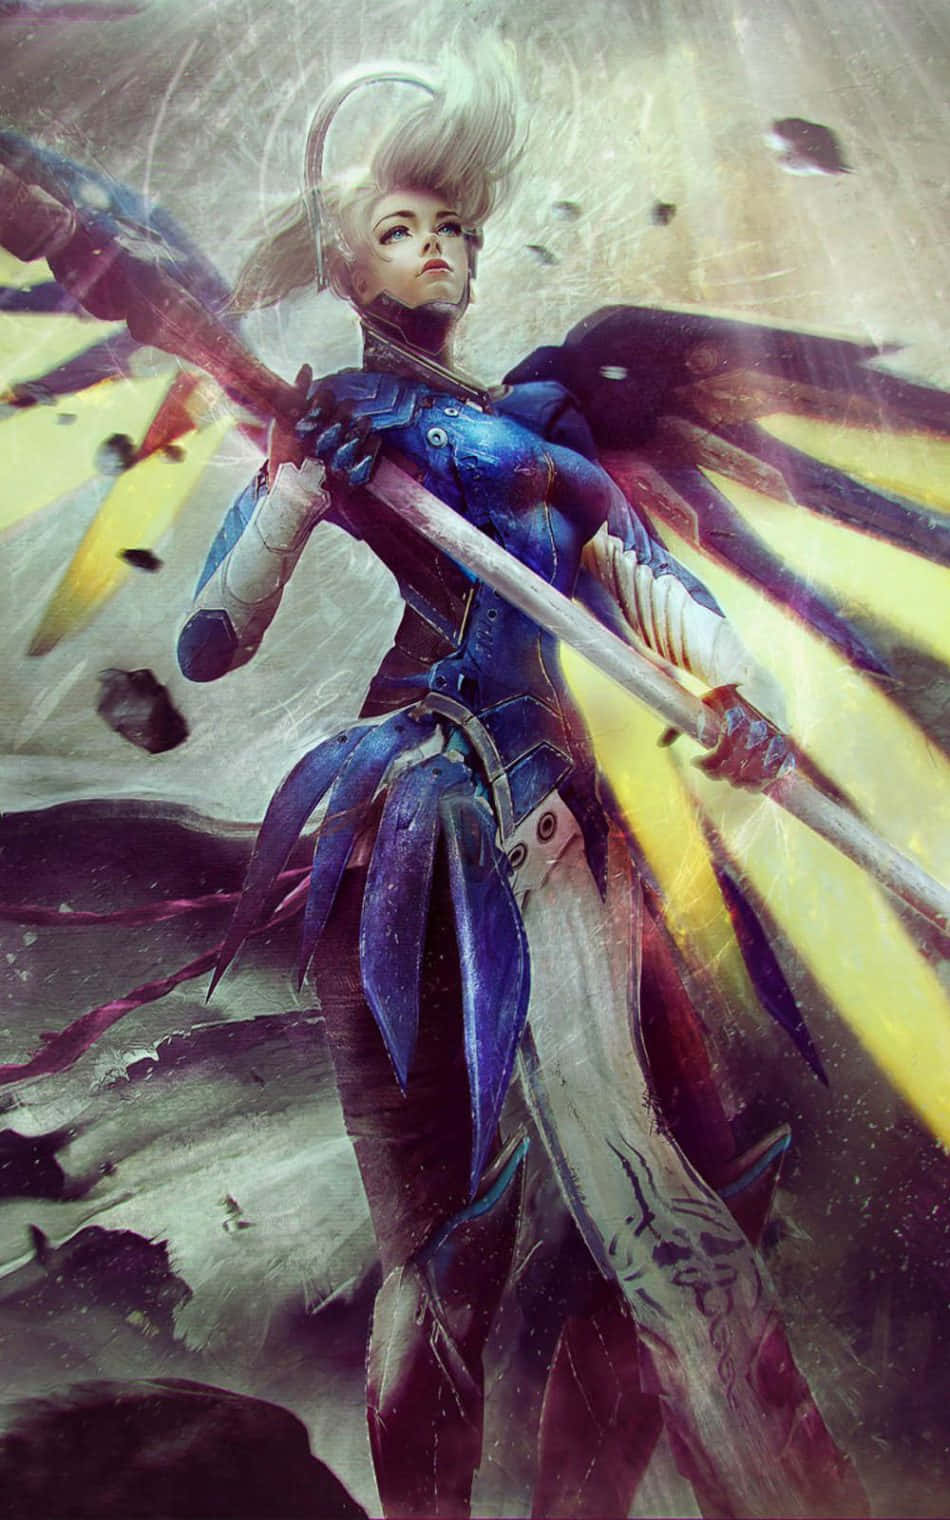 Overwatch's Mercy soaring through skies Wallpaper